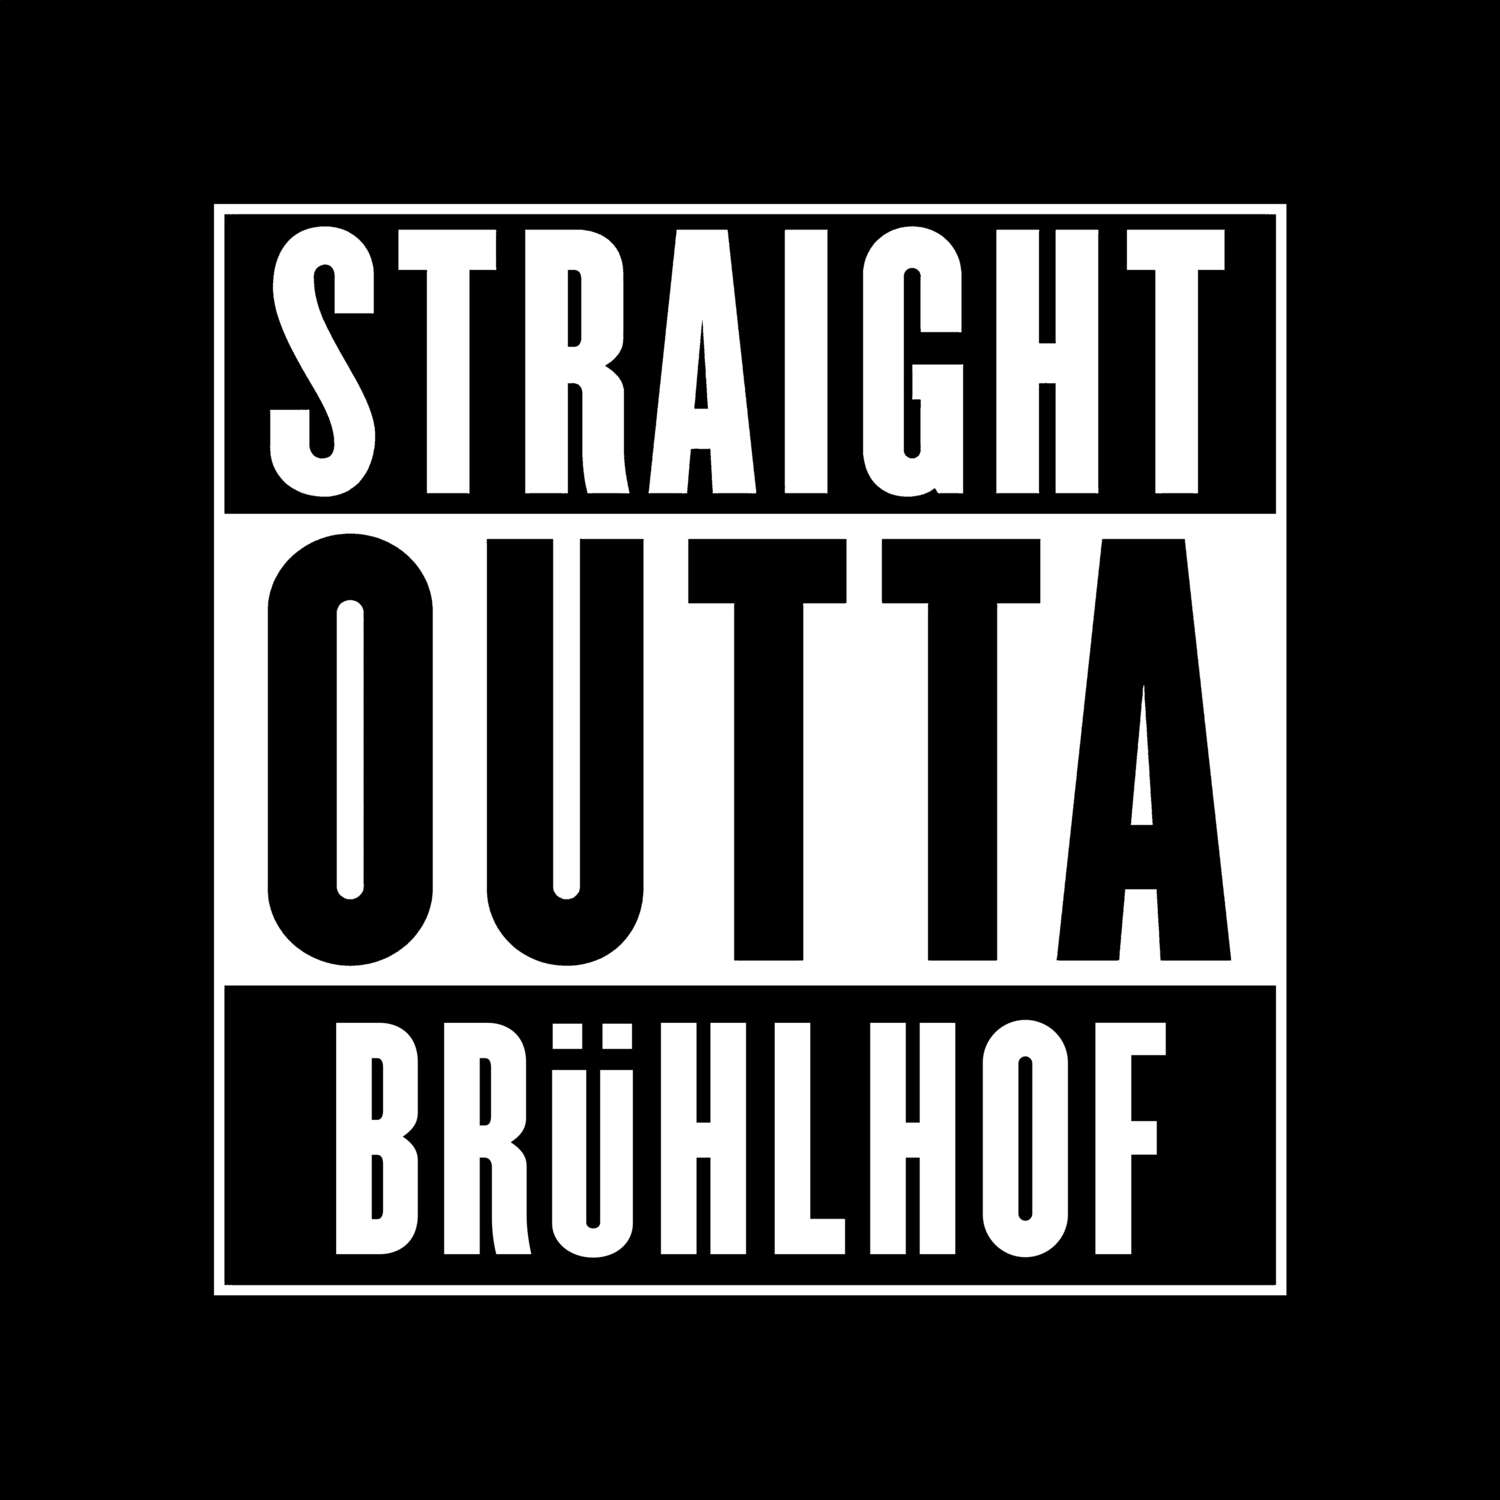 Brühlhof T-Shirt »Straight Outta«